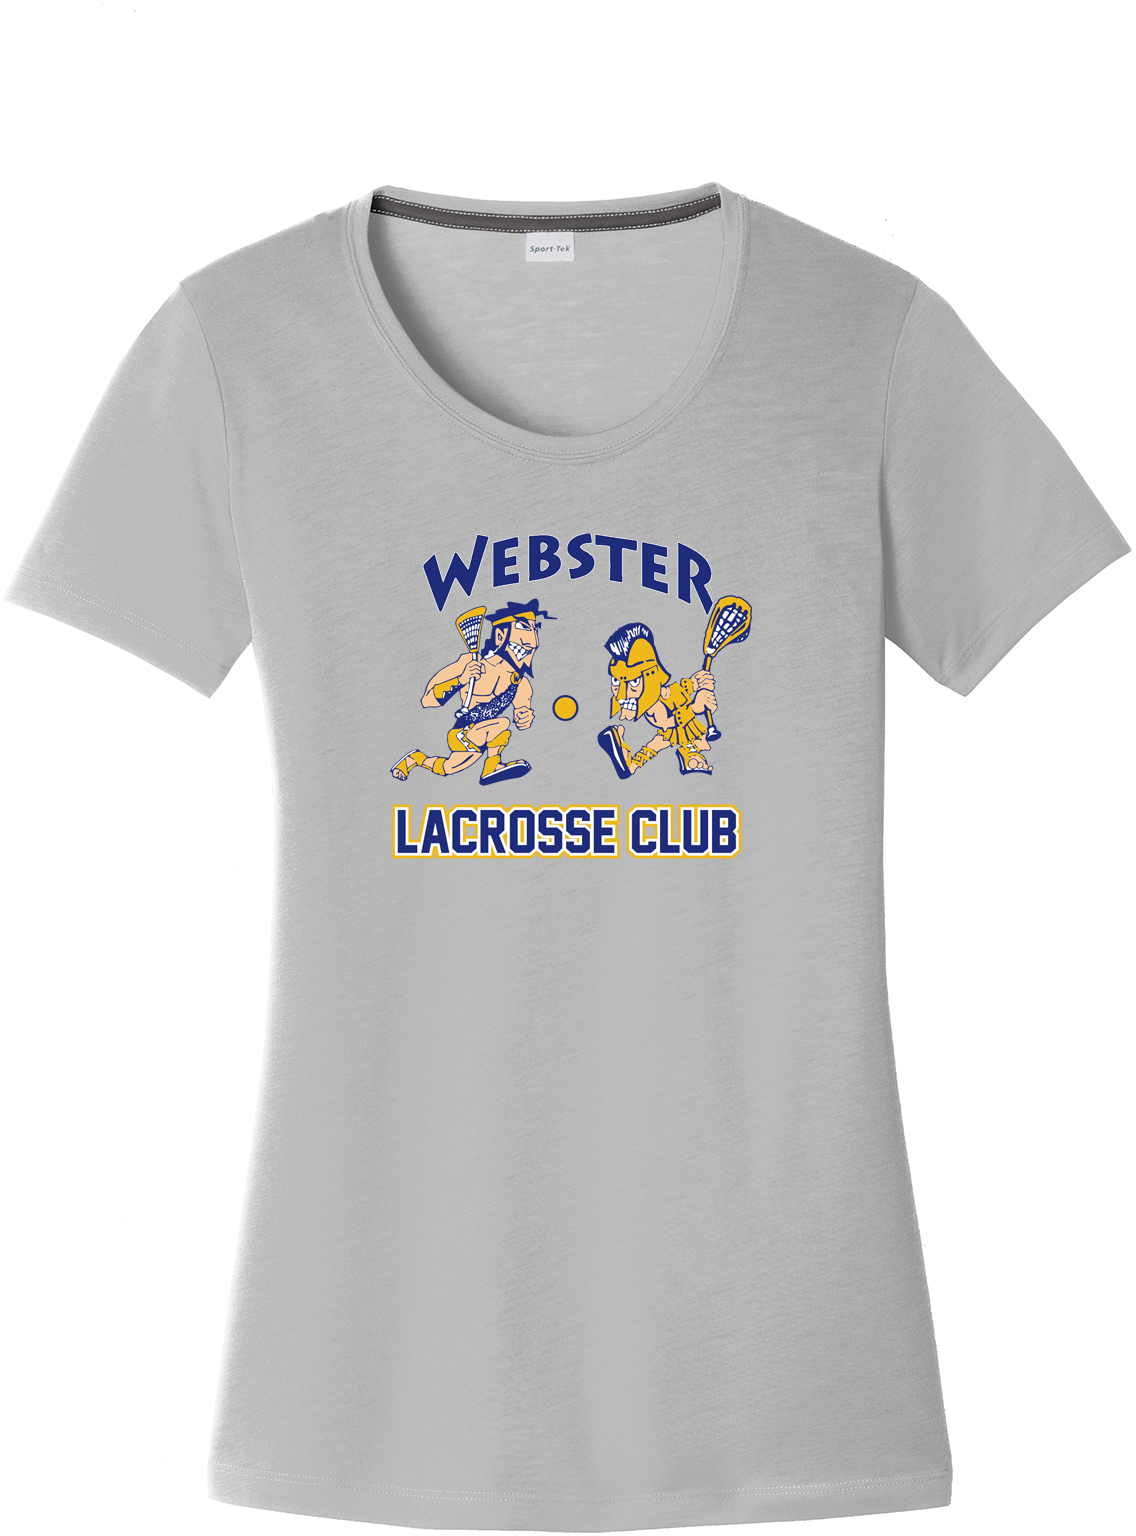 Webster Lacrosse Silver Women's CottonTouch Performance T-Shirt